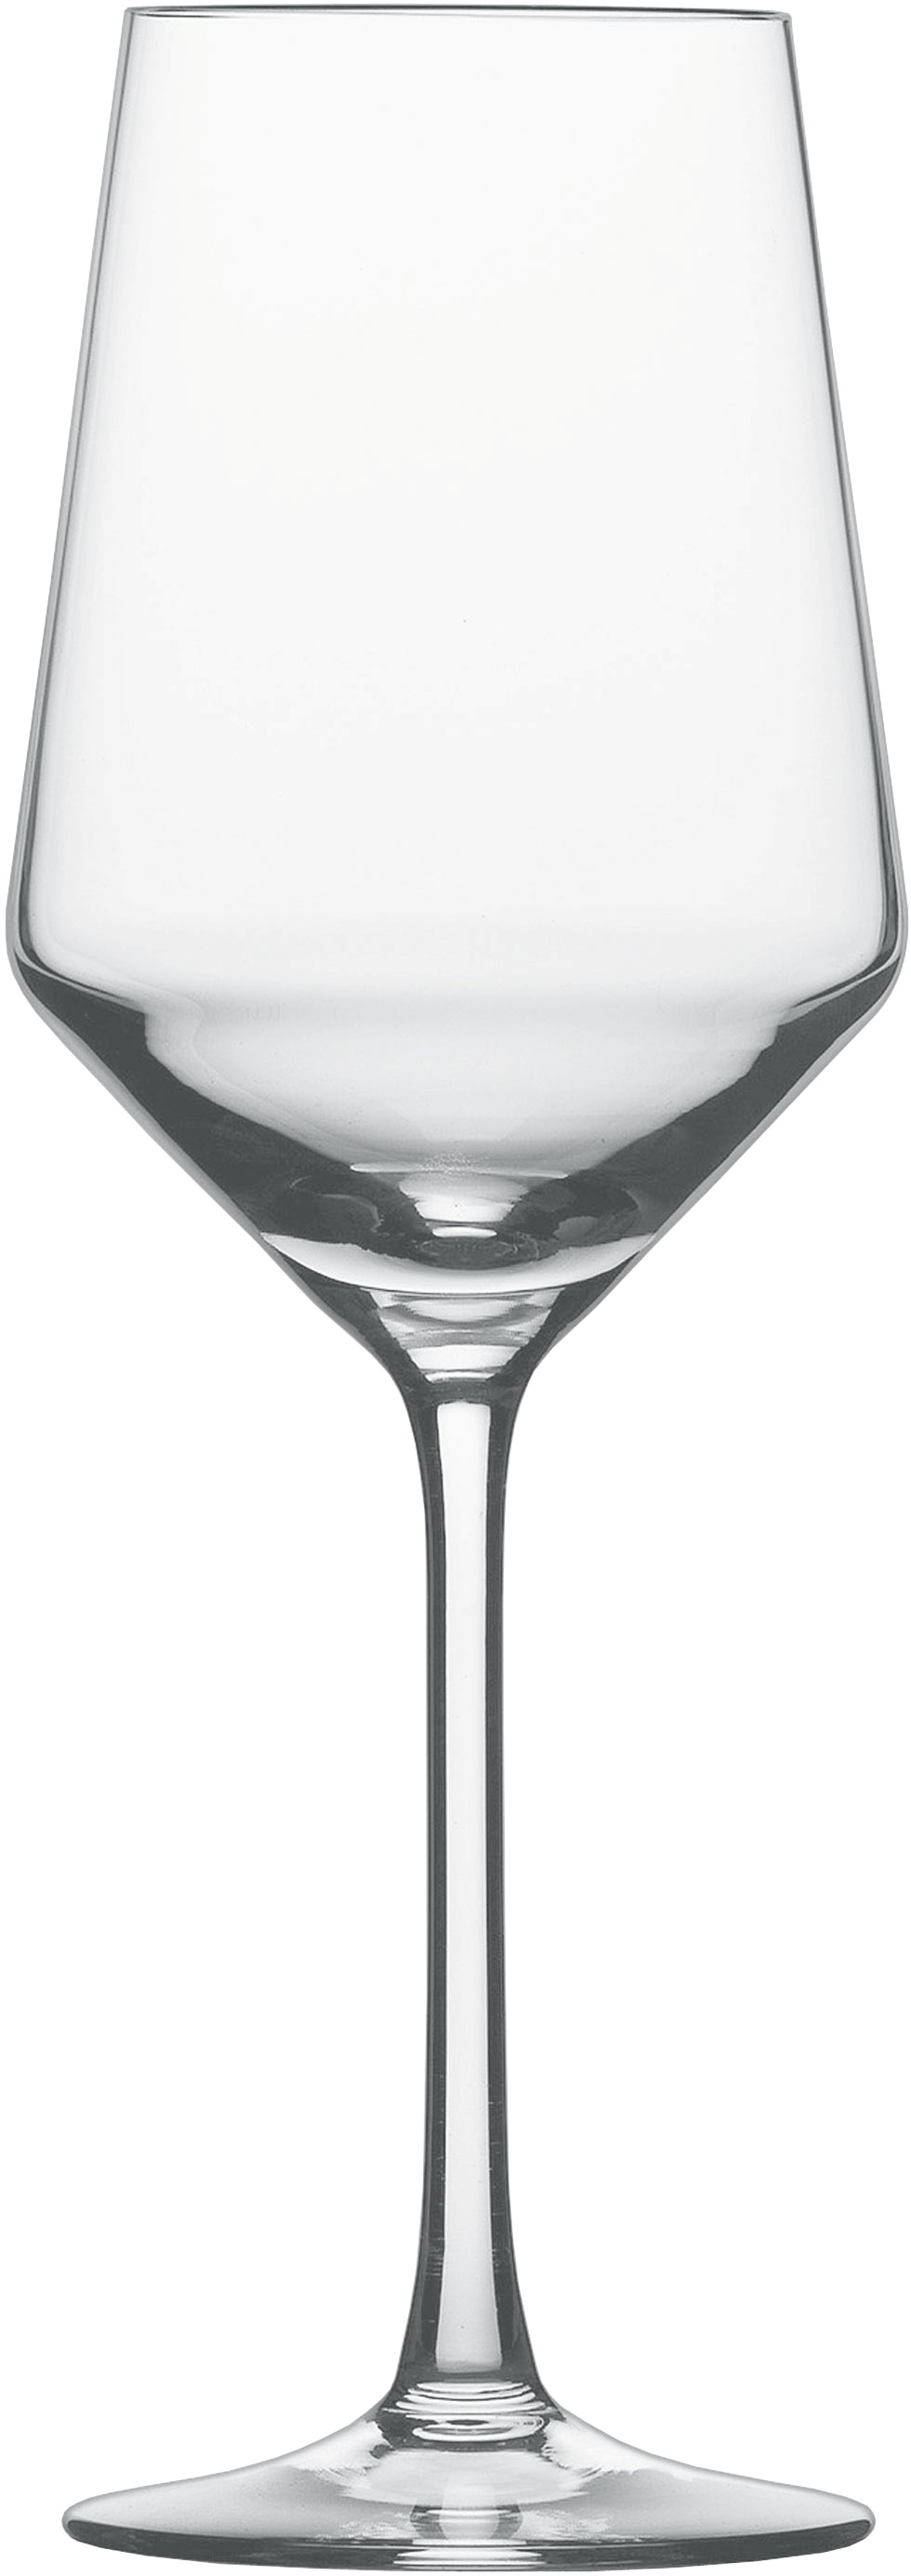 Zwiesel glas, belfesta, kozarec za vino riesling, 300 ml, 1 kos